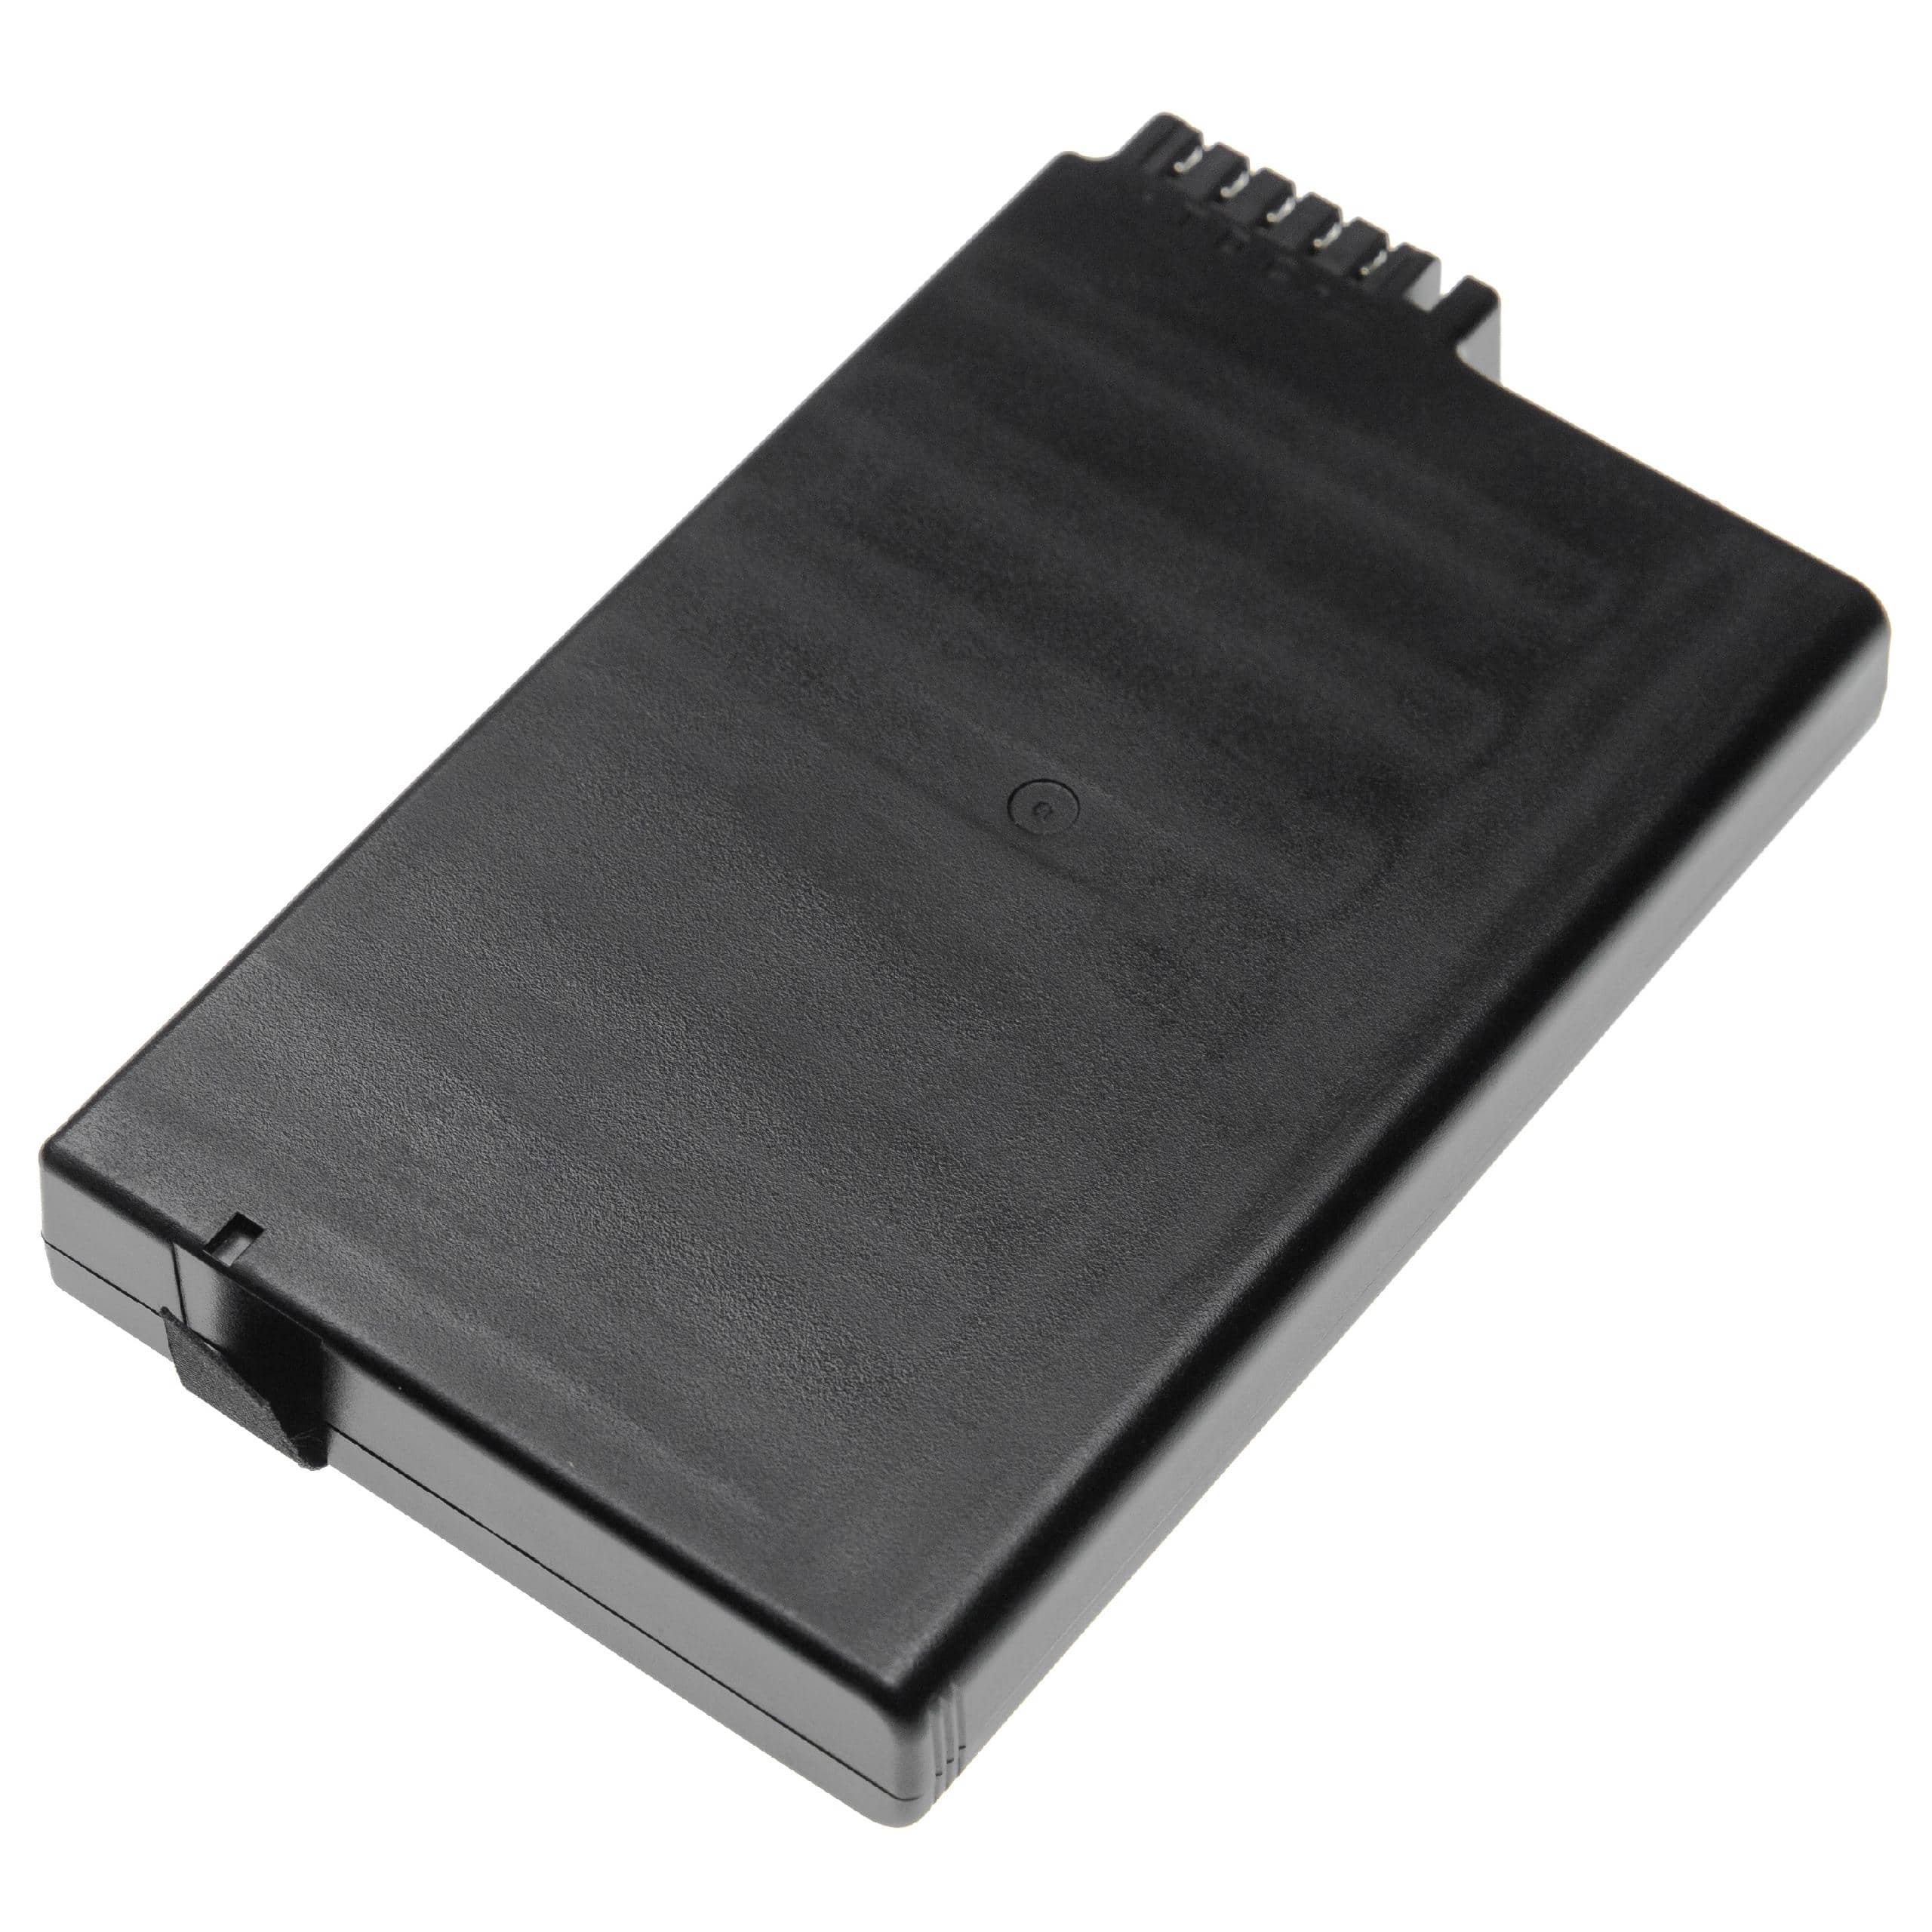 Batteria sostituisce Getac / Hasee 33-01PI, 338911120104 per notebook Daewoo - 8700mAh 10,8V Li-Ion nero